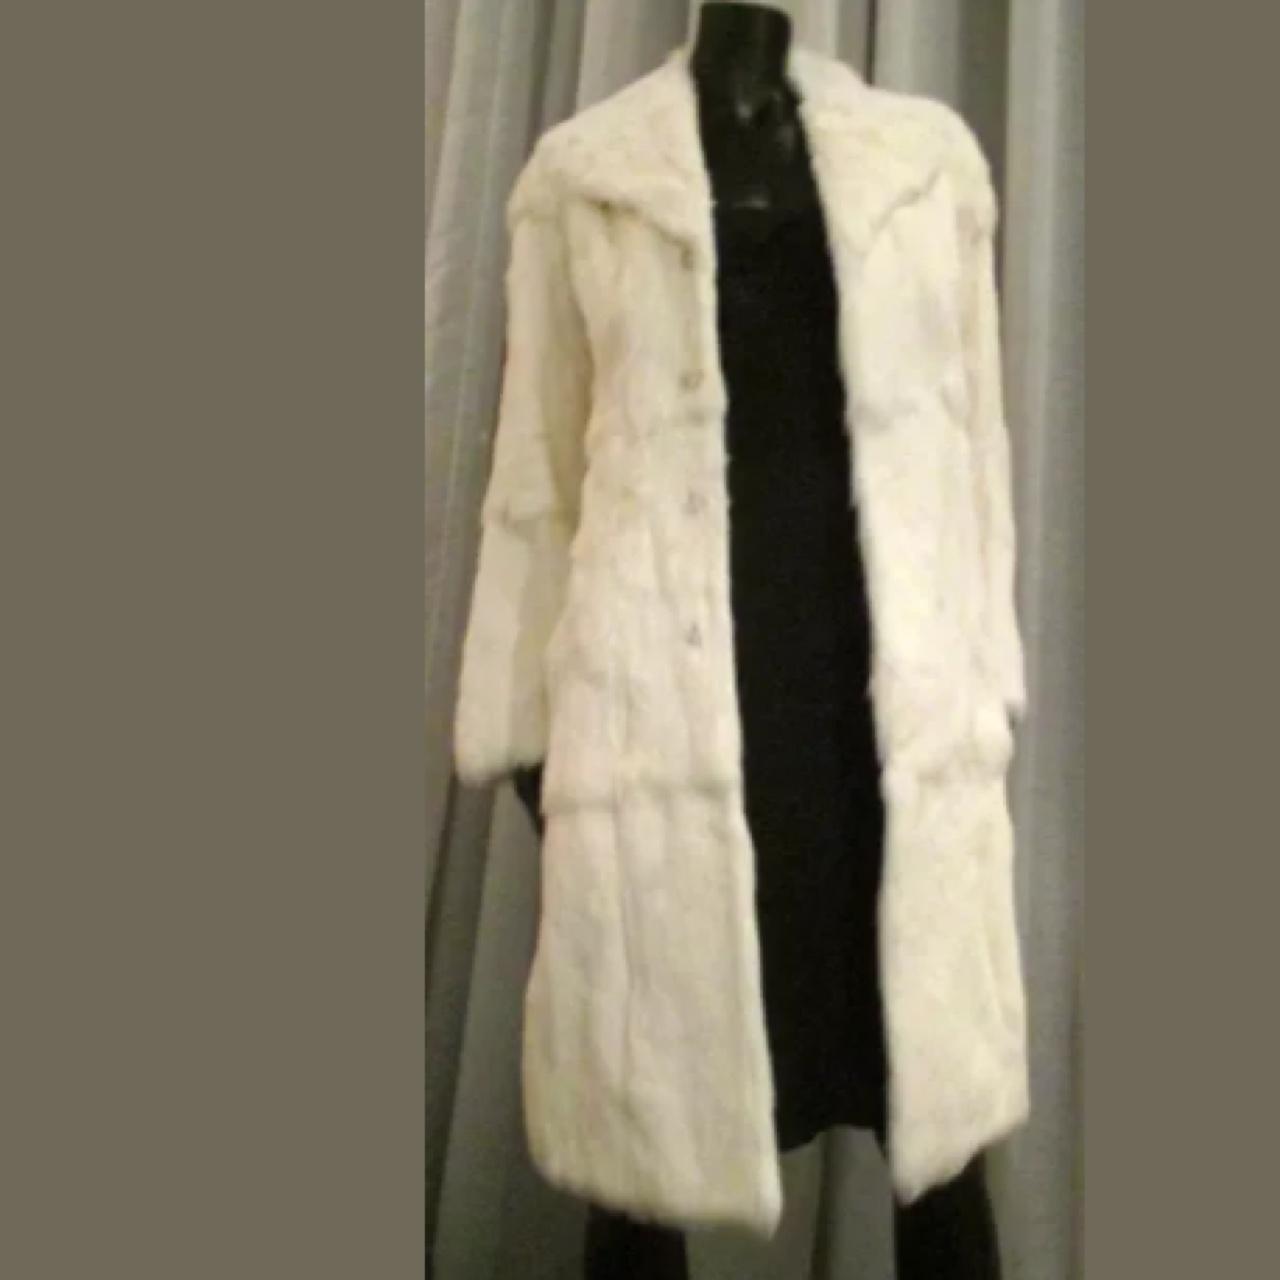 New Diesel white rabbit fur coat. Size medium. New.